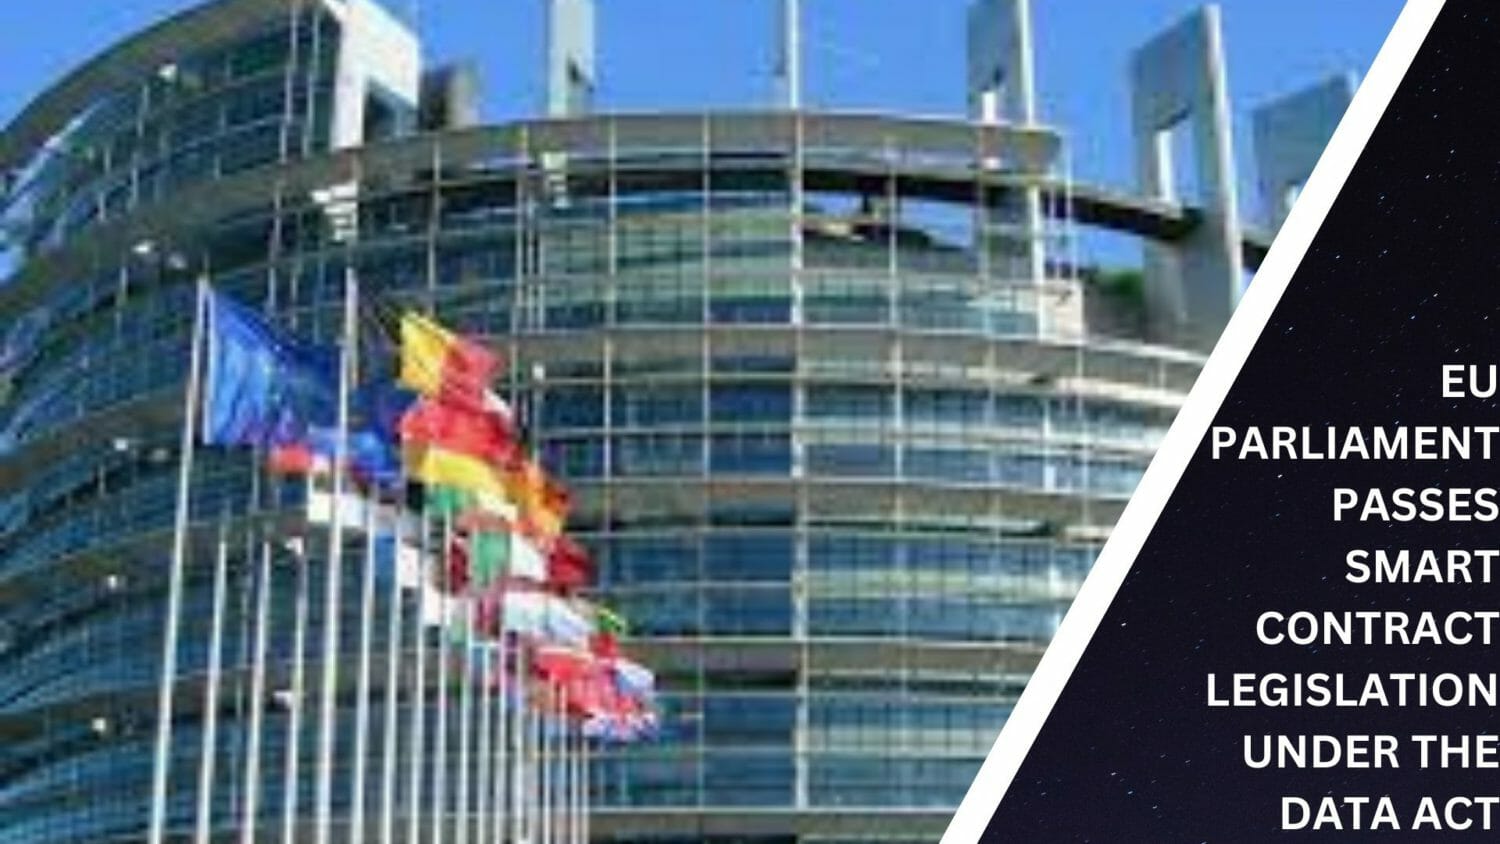 Eu Parliament Passes Smart Contract Legislation Under The Data Act